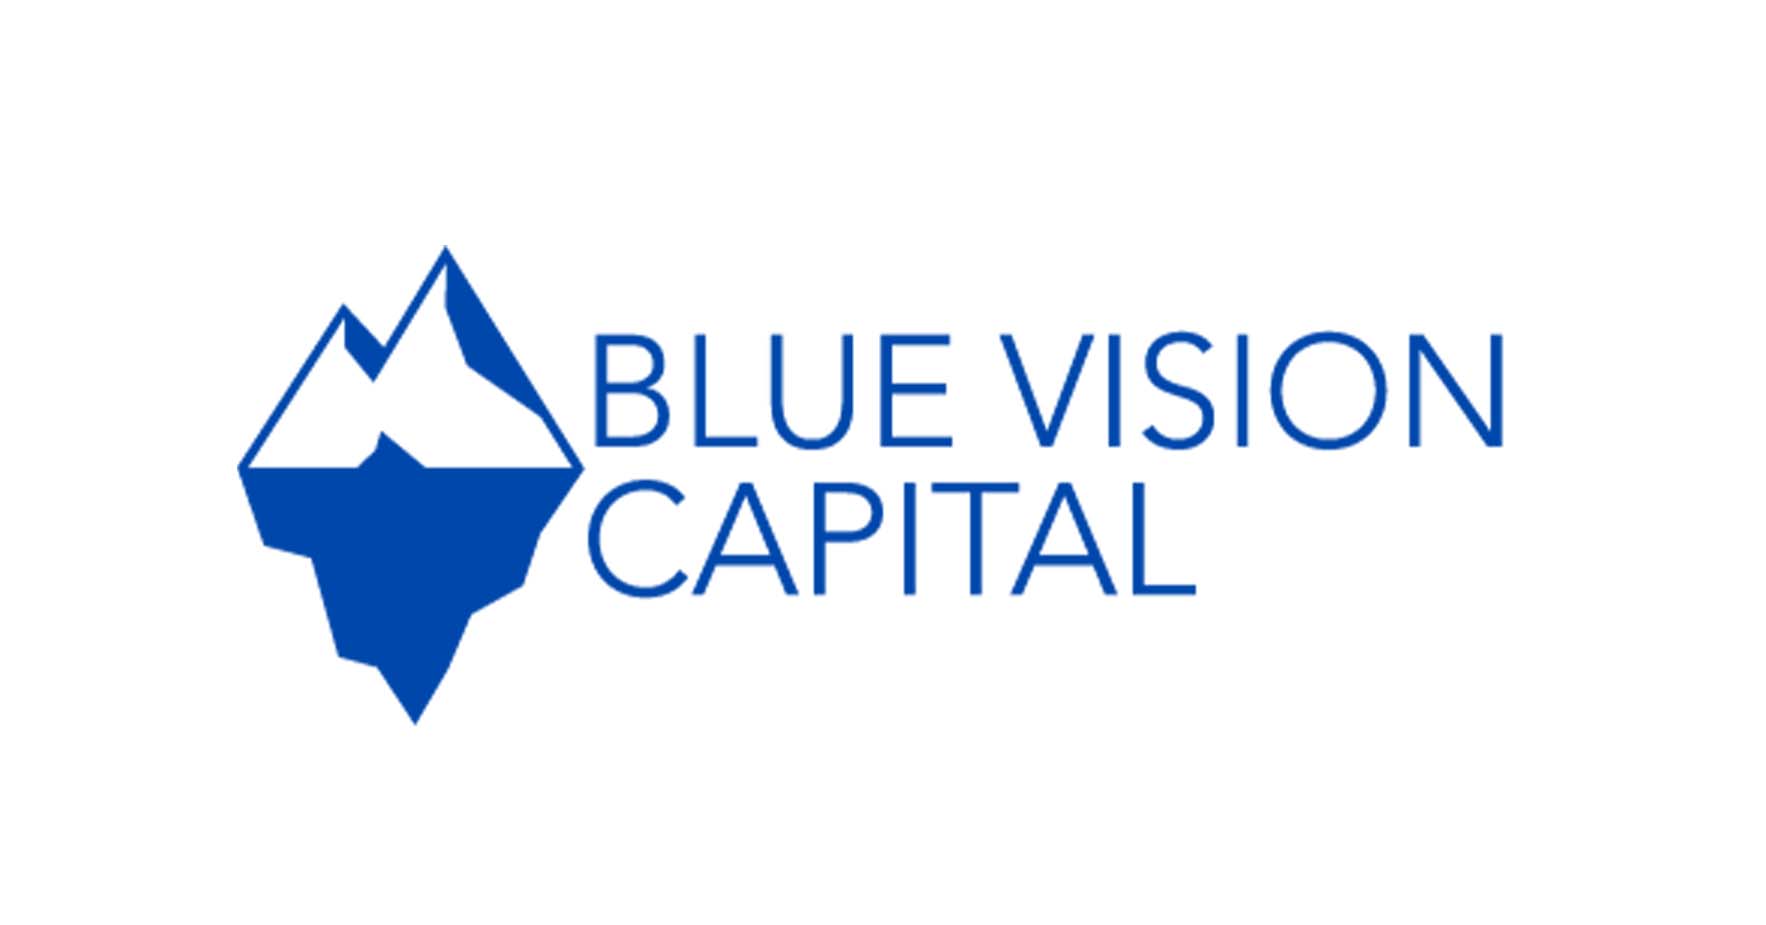 Blue Vision Capital venture capital firm logo